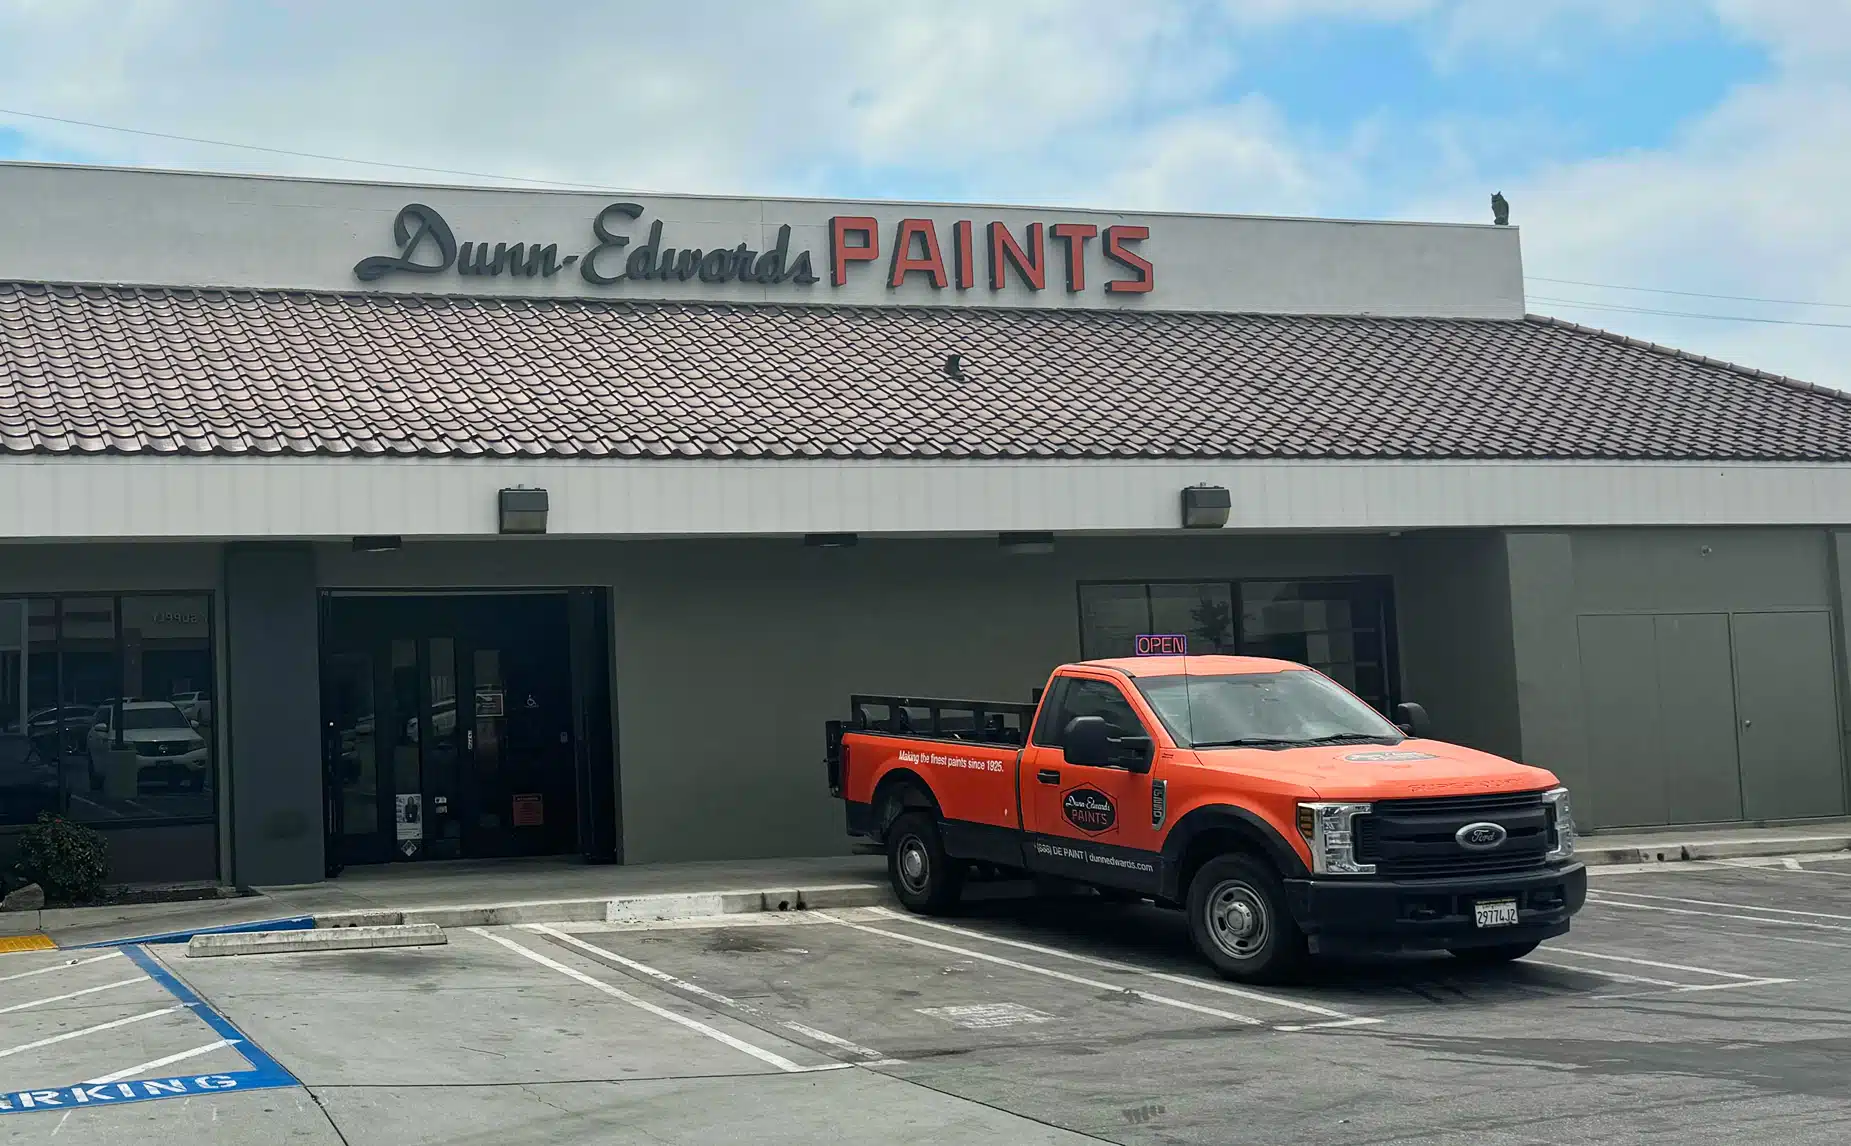 Dunn-Edwards Paint Store in San Bernardino CA 92404